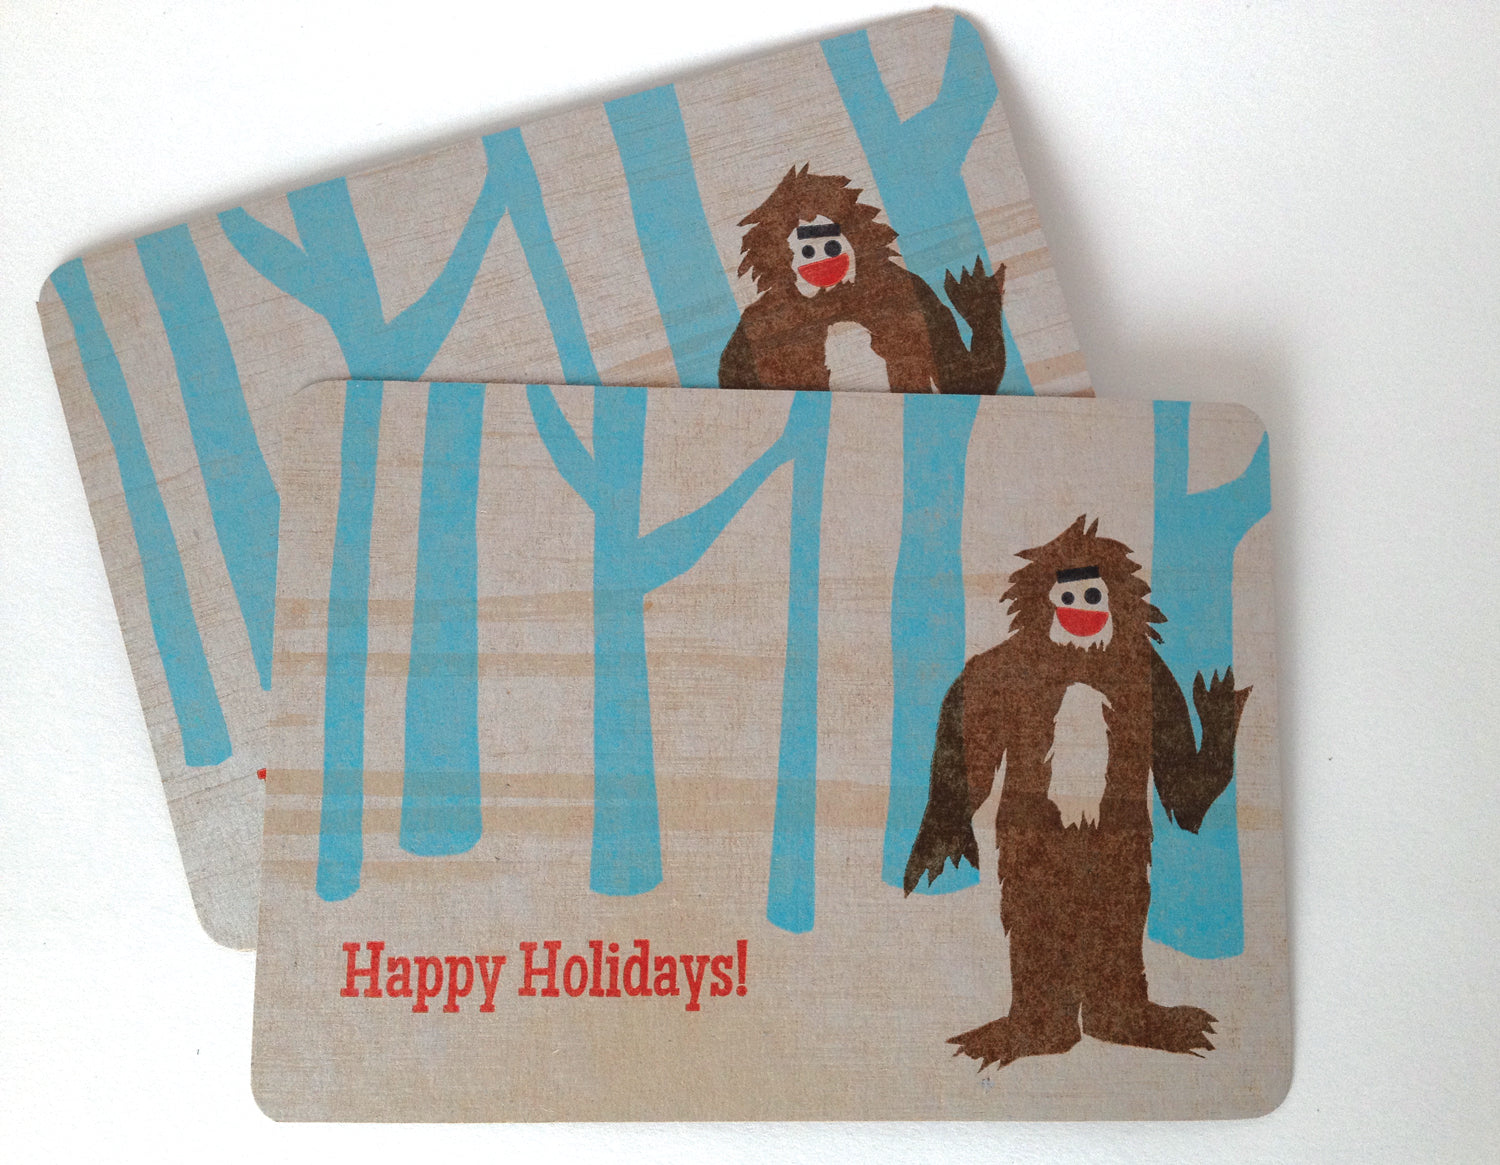 Holiday Yeti Card, Letterpress Printed, single-sided, 5x7